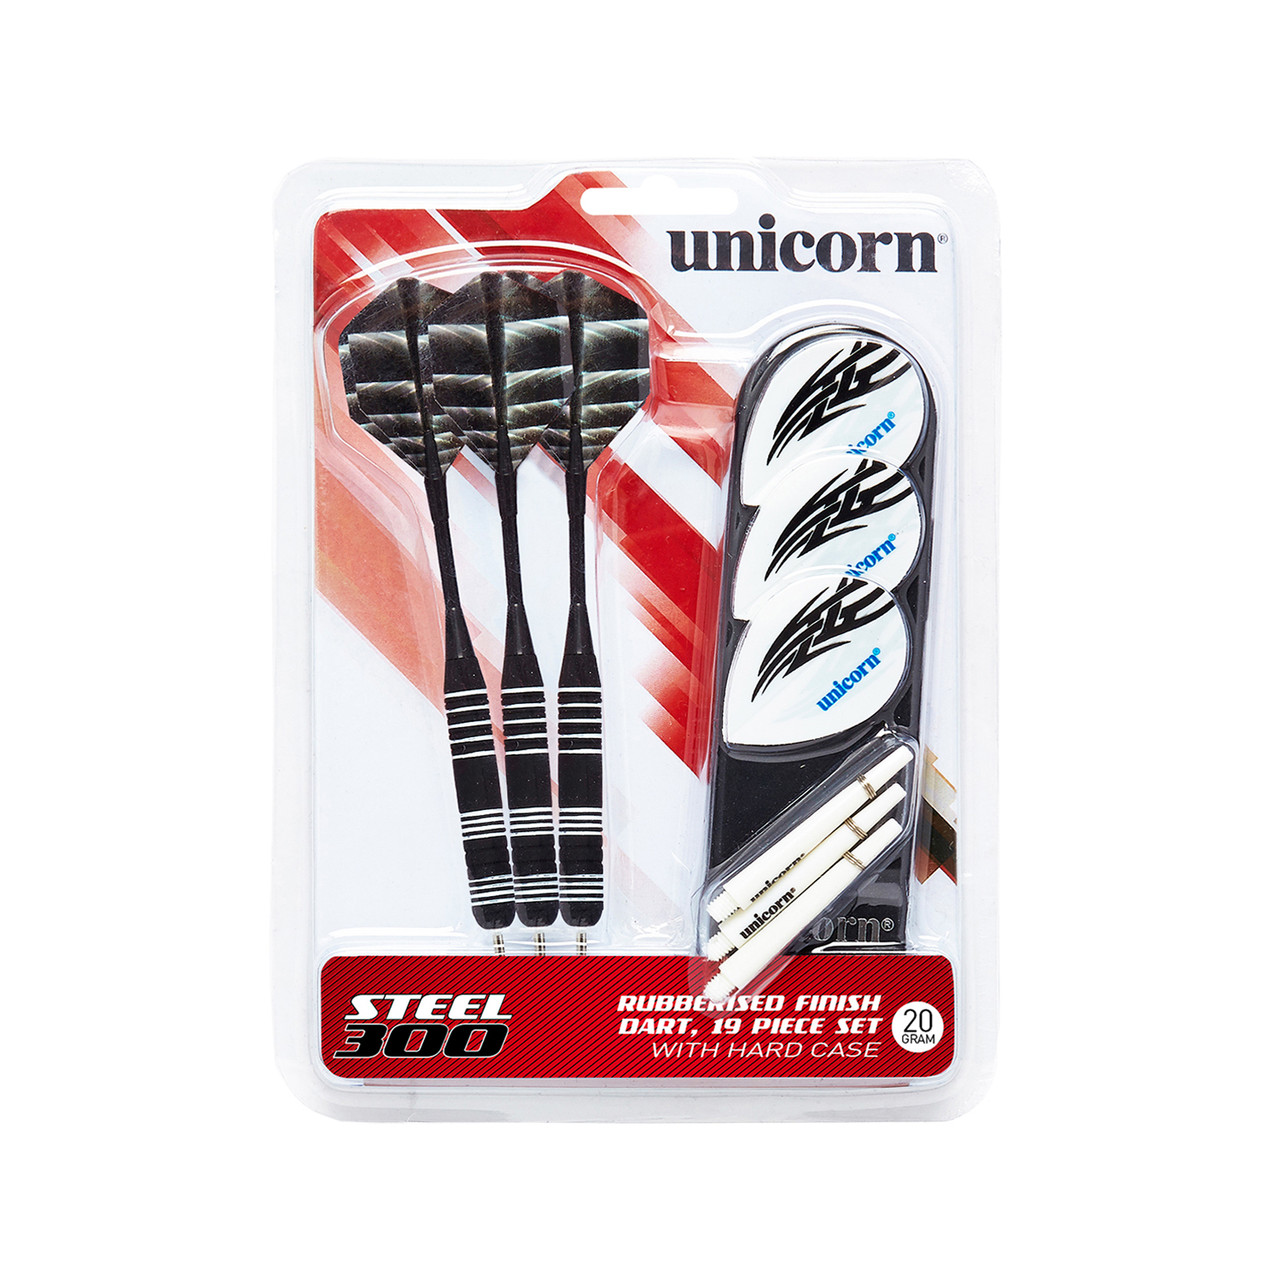 Unicorn Steel 300 Dart Set - D71814